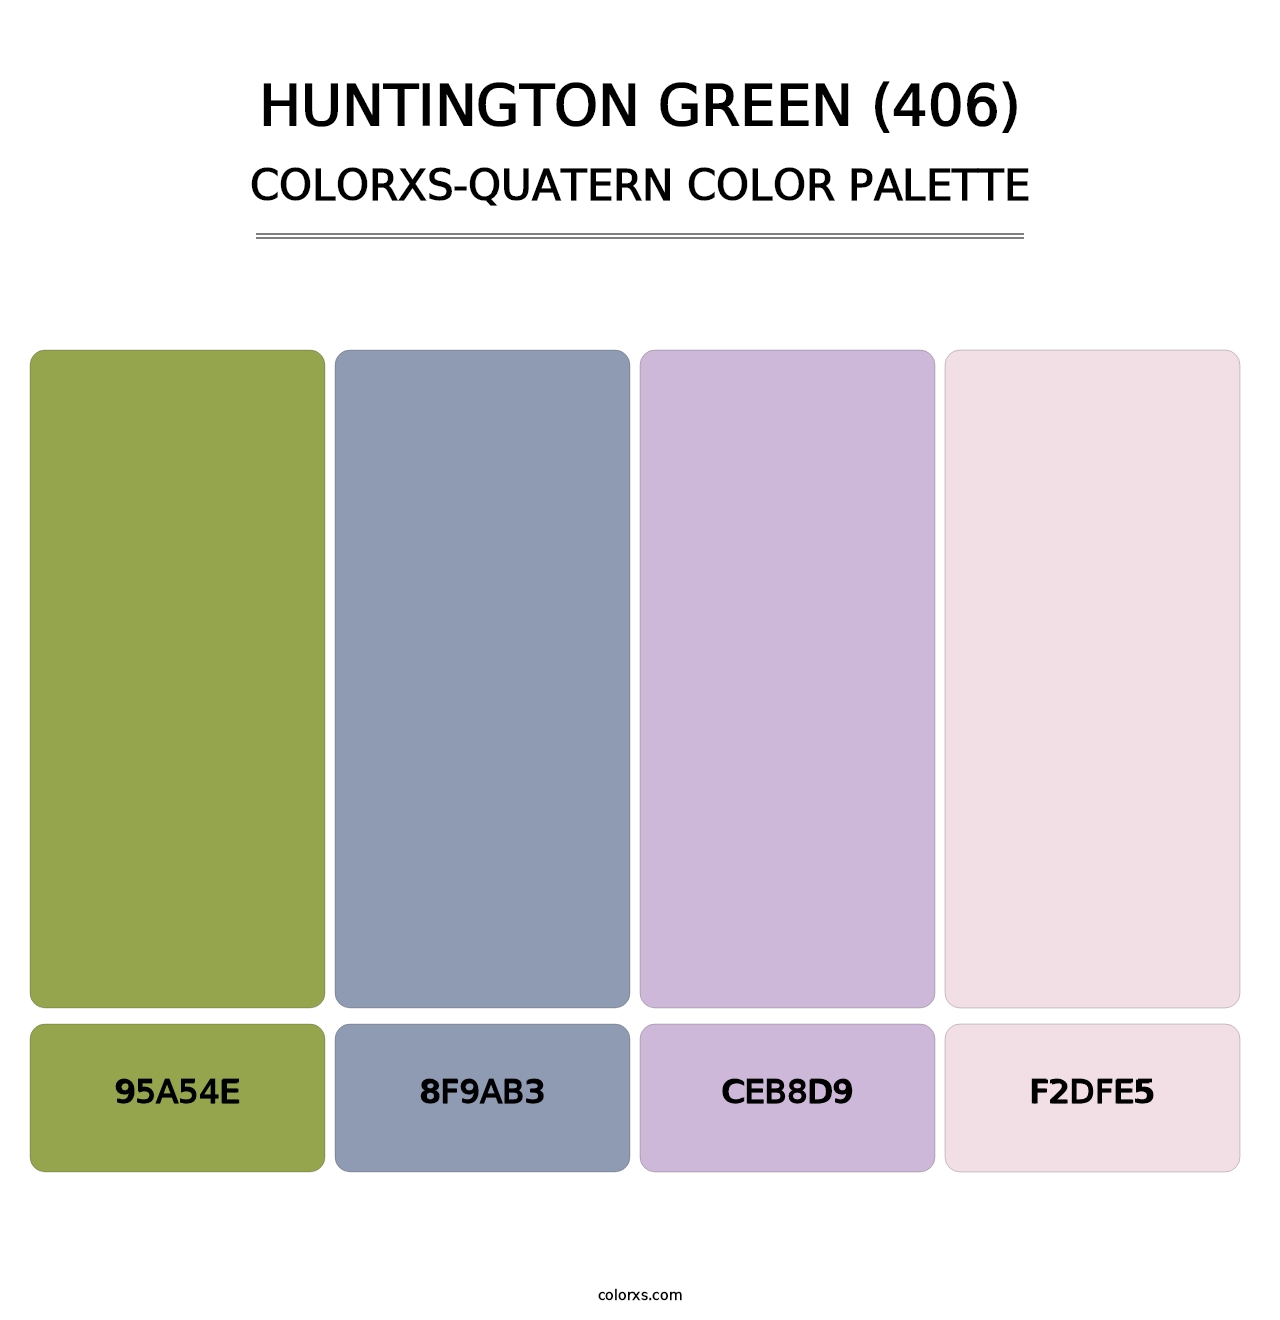 Huntington Green (406) - Colorxs Quatern Palette